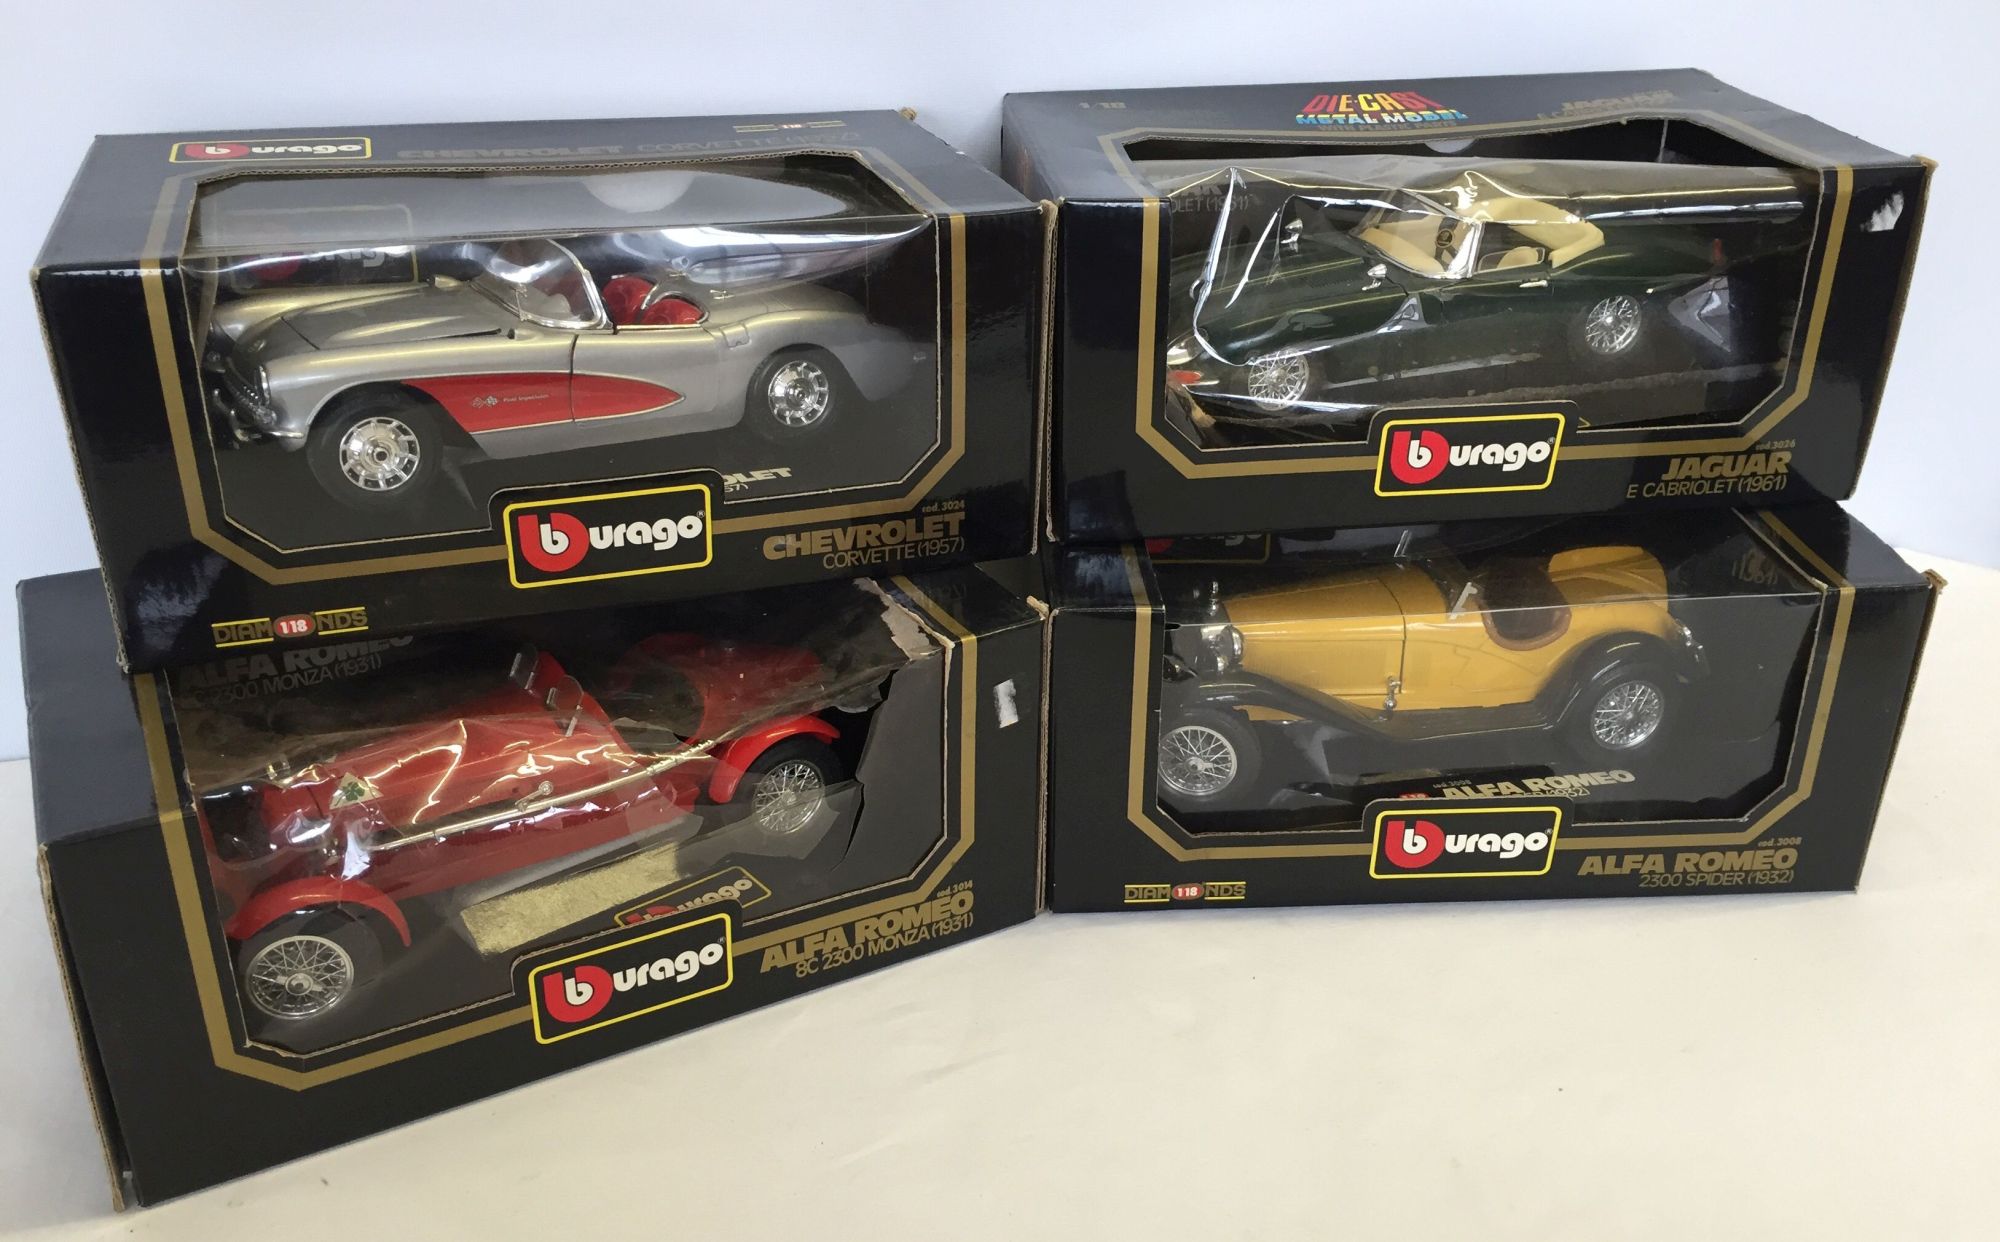 4 boxed Bburago Cars 1:18 scale, to include - Jaguar E Cabriolet, Alpha Romeo Spider 2300, Chevrolet